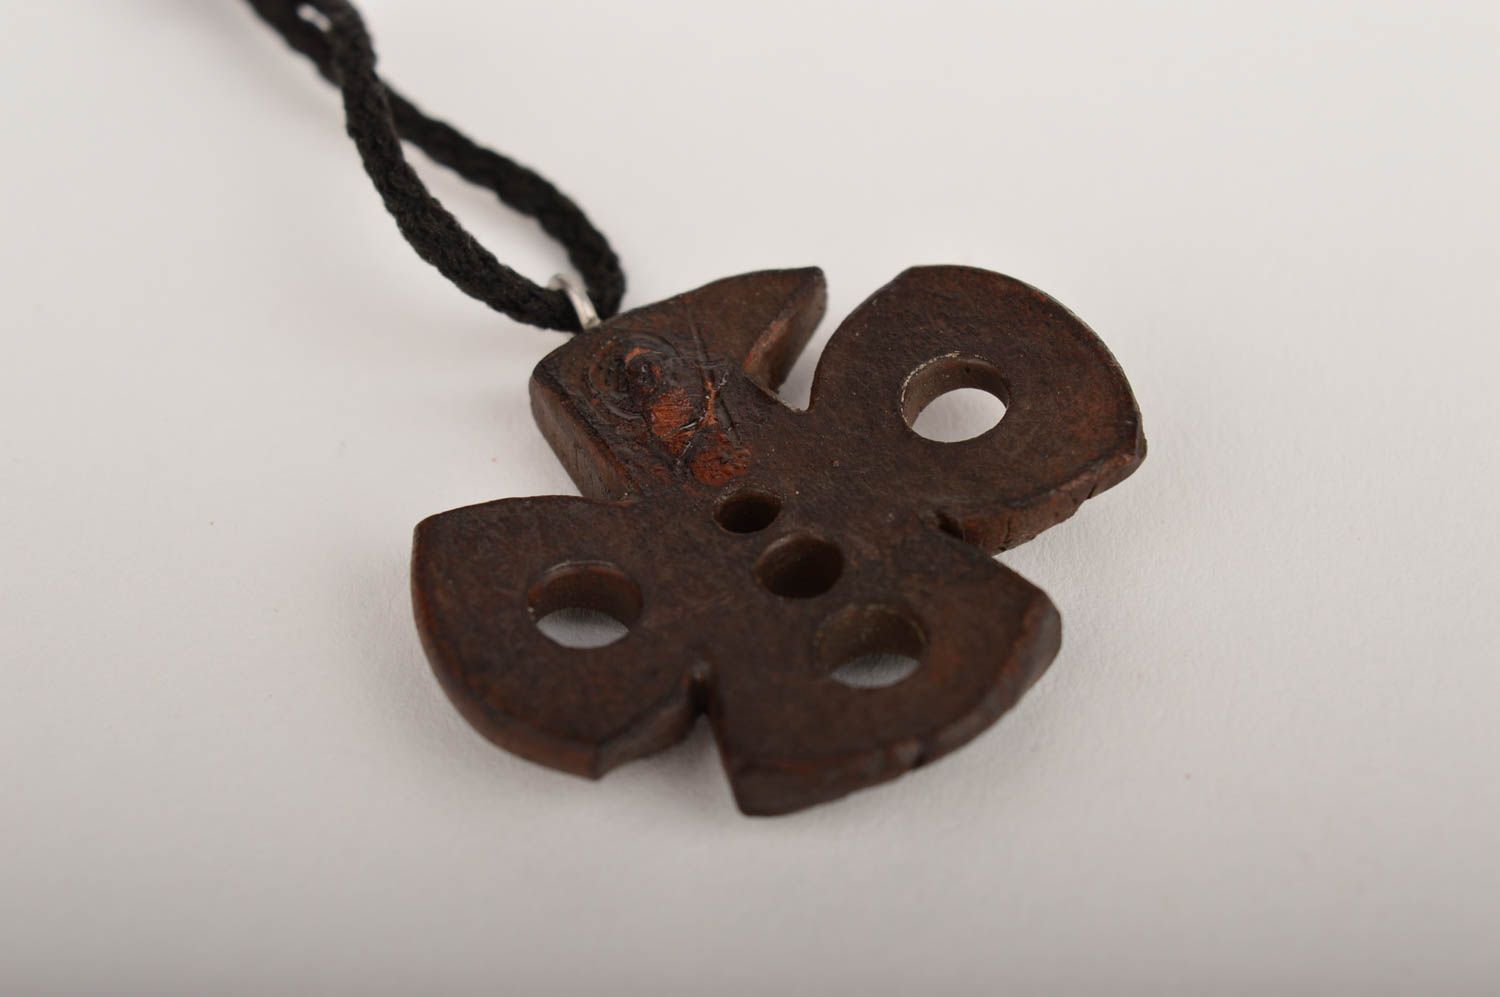 Handmade pendant designer pendant clay jewelry unusual accessory gift ideas photo 4